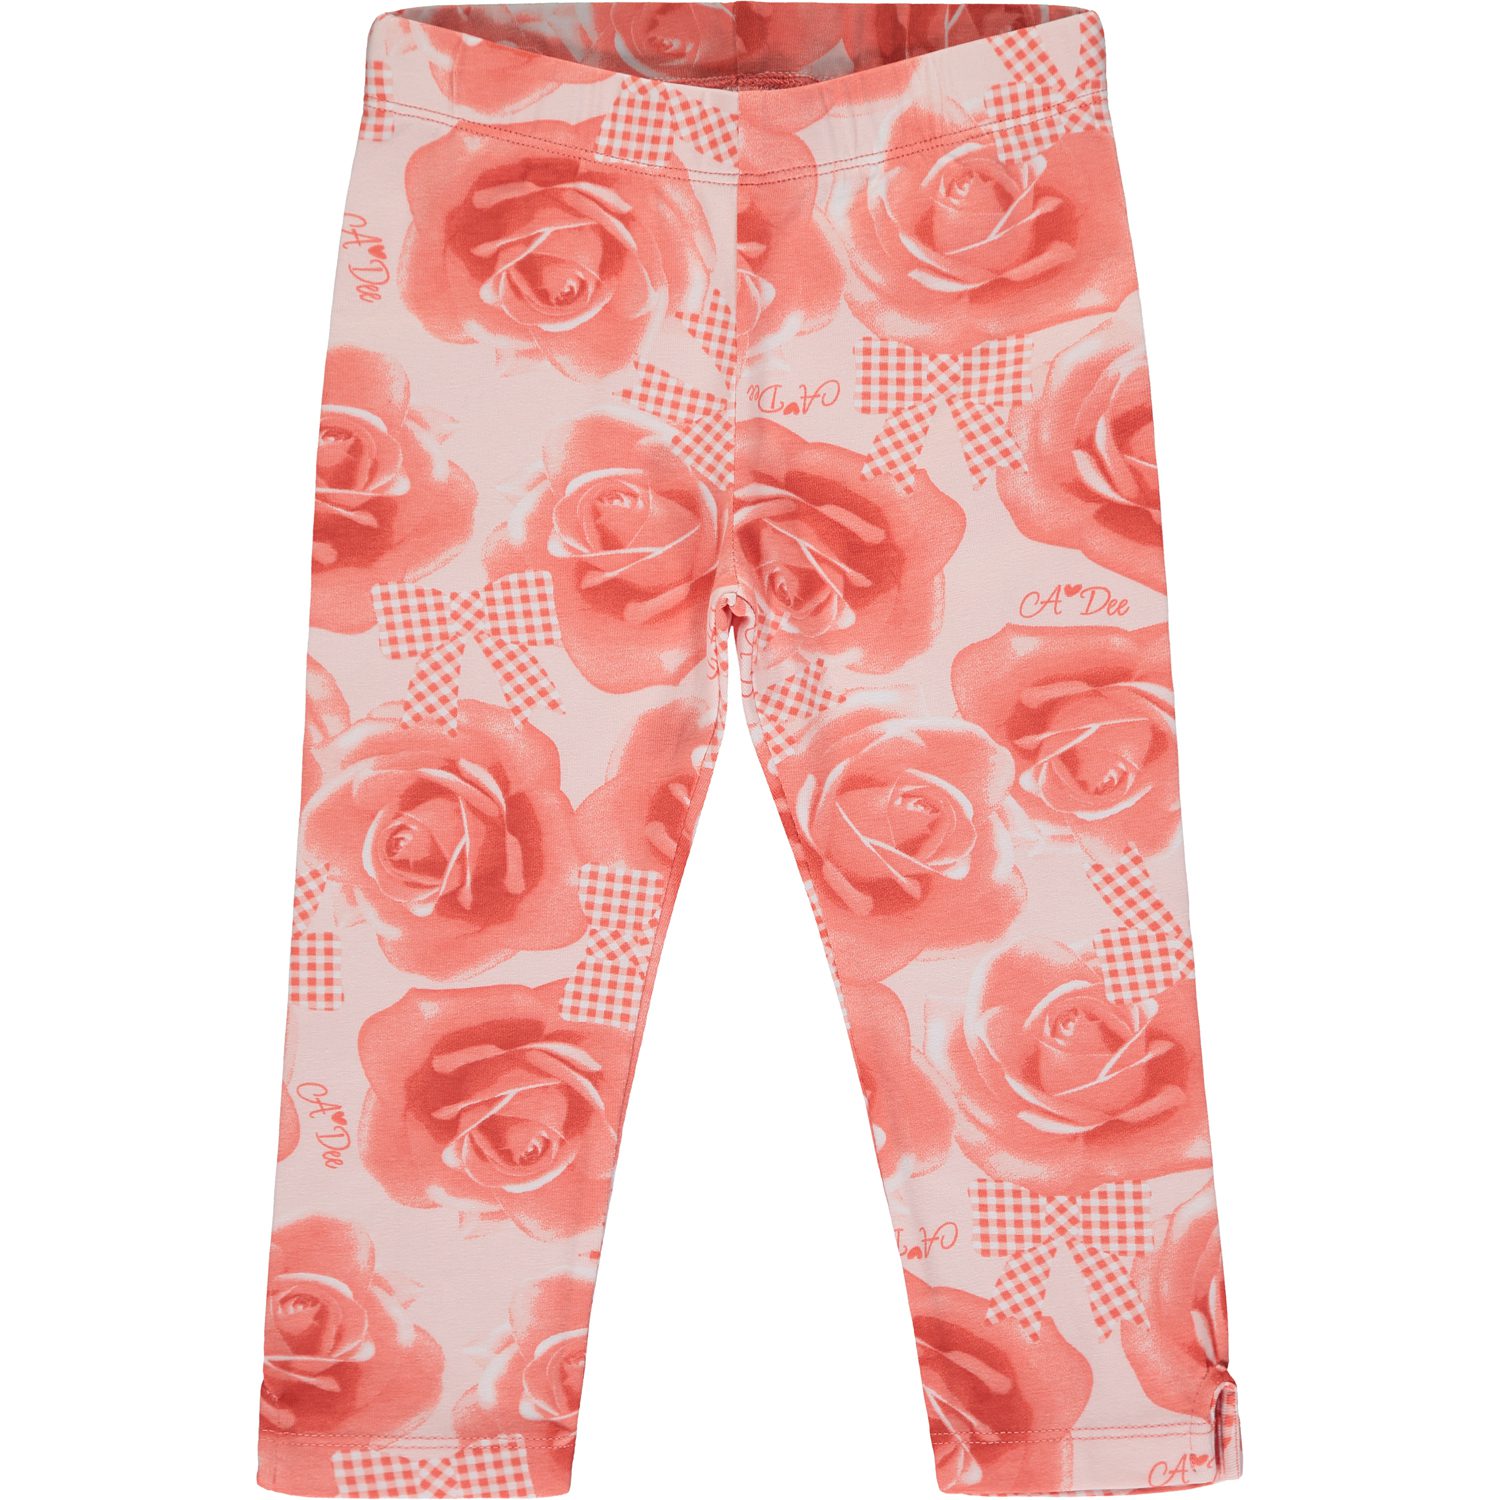 A’dee Yuki rozen print legging set broekje